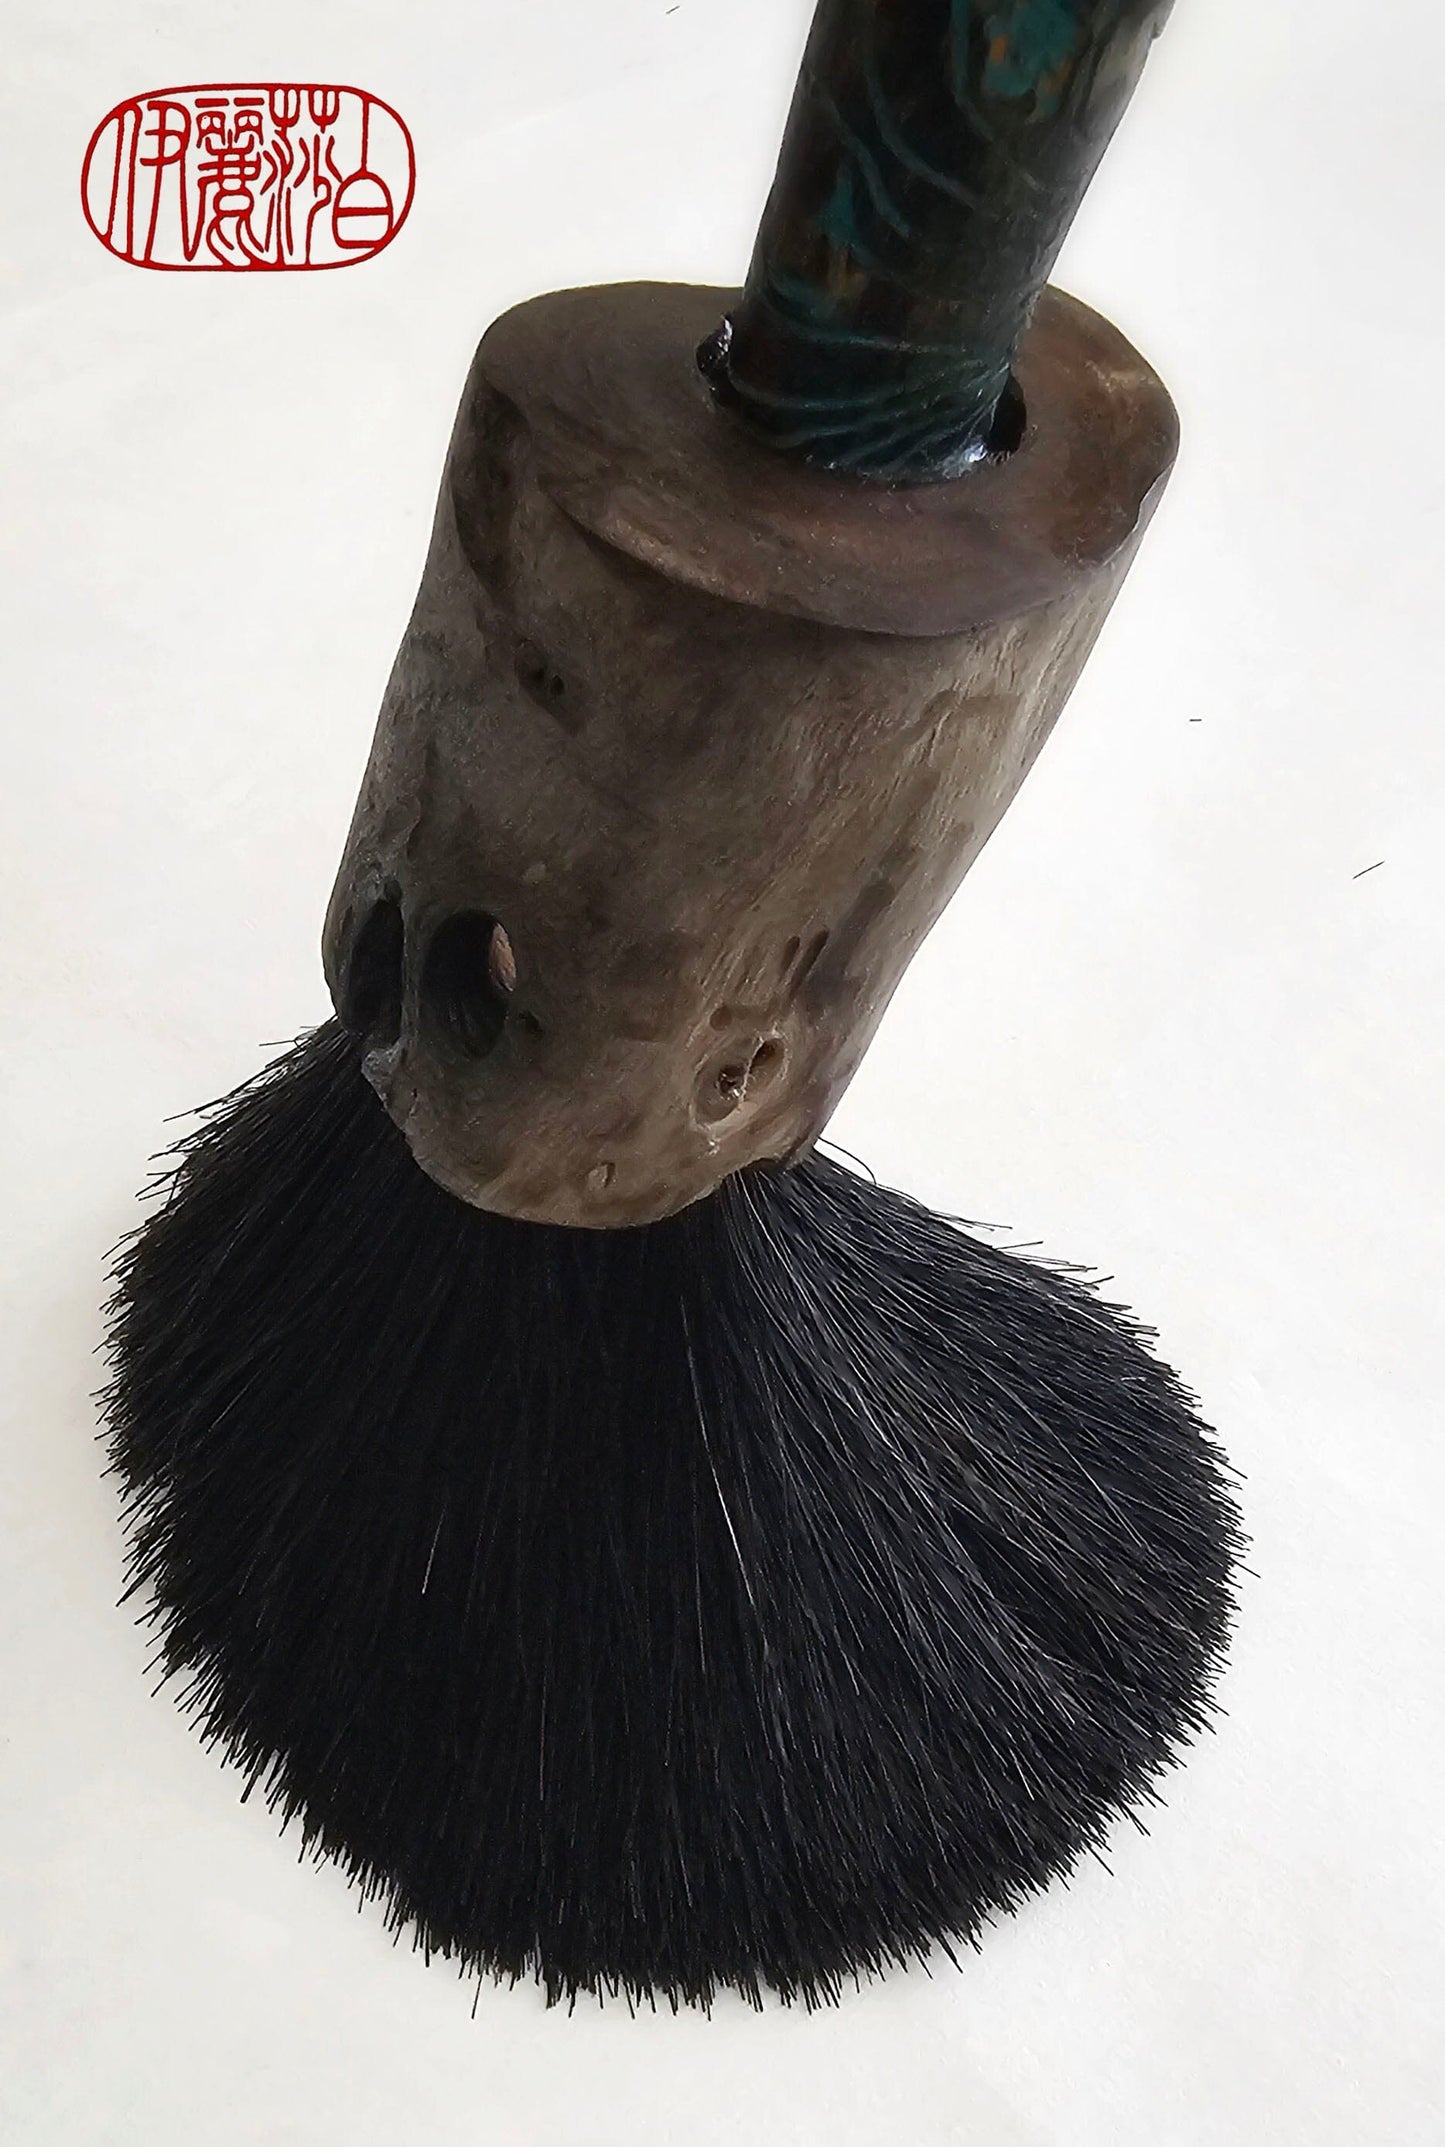 Premium Handcrafted Coarse Bristle Painter's Brush with Natural Wormwood Handle - Versatile for Acrylics, Oils, and Inks Art Supplies Elizabeth Schowachert Art